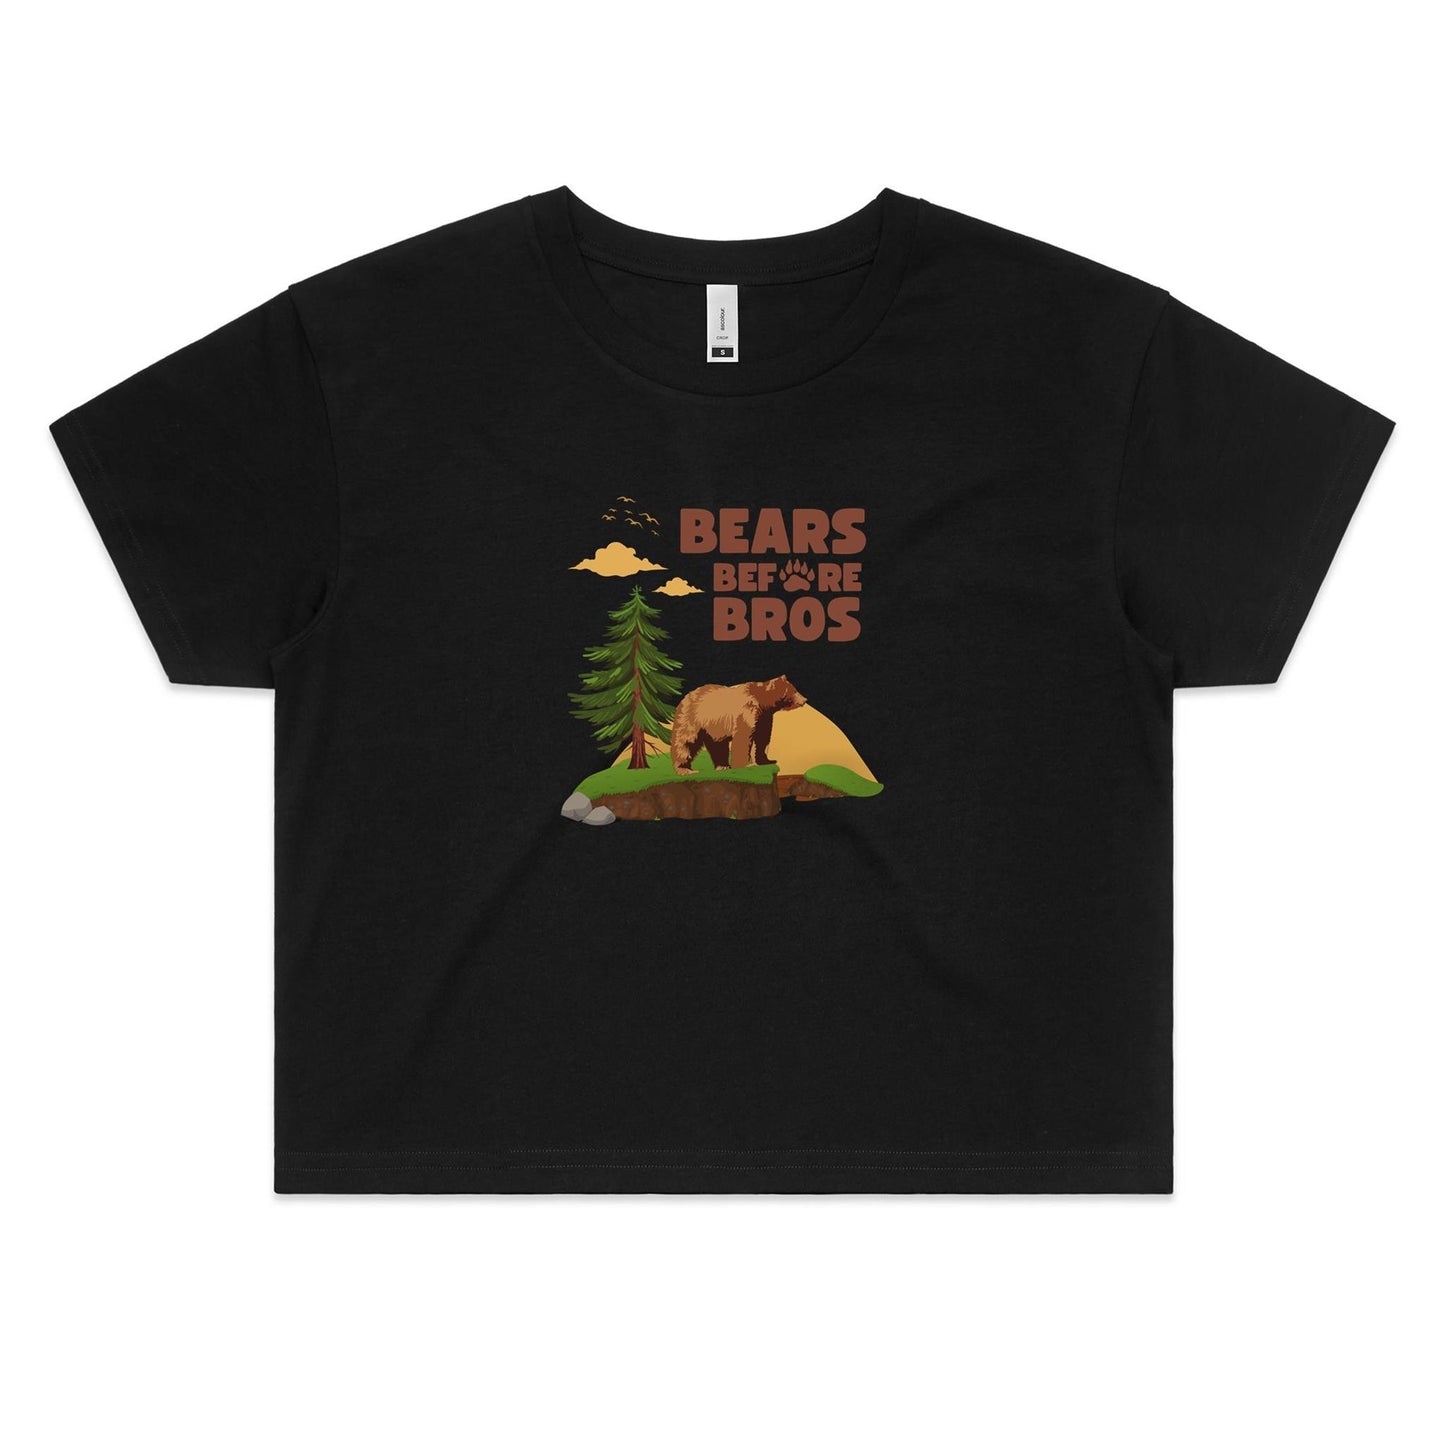 Bears before bros AS Colour - Women's Crop Tee